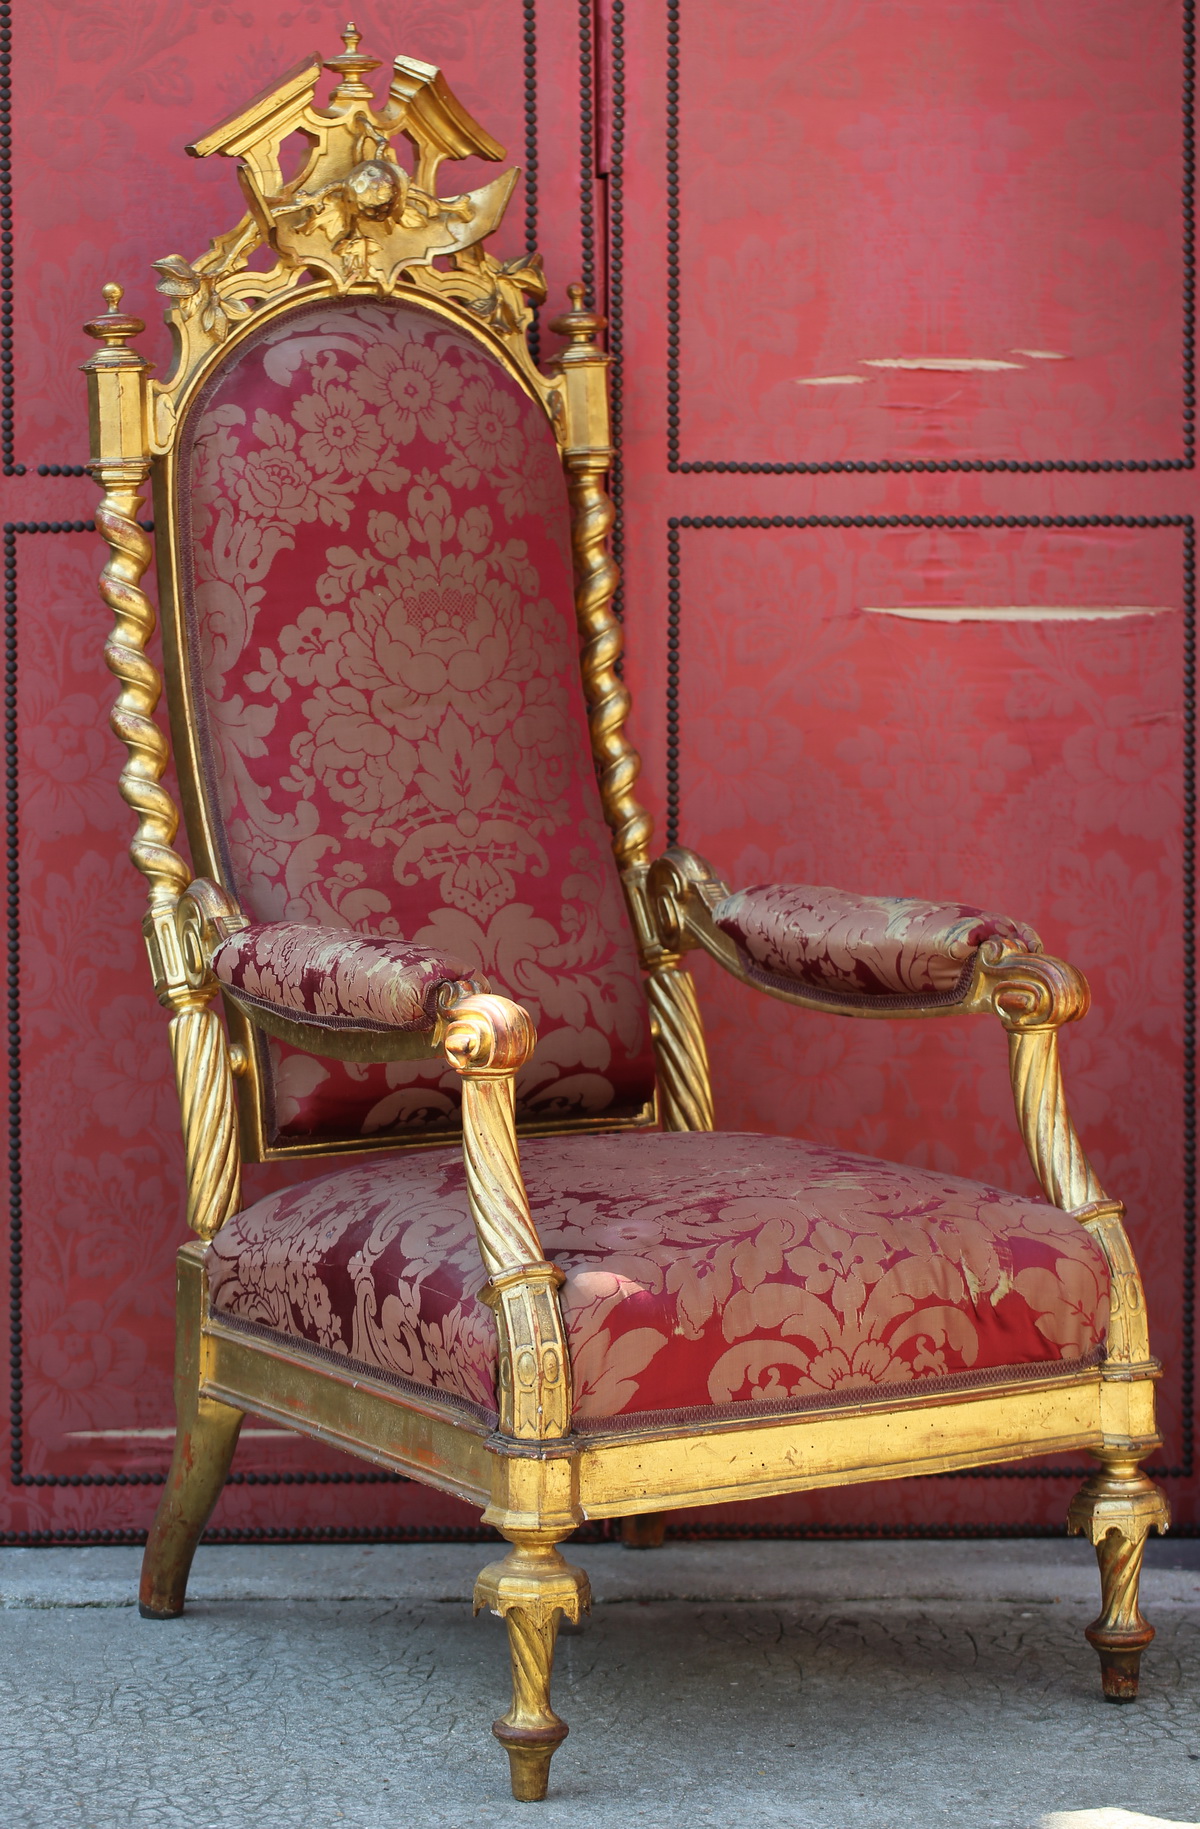 Pair of ceremonial armchairs, Venice circa 1840